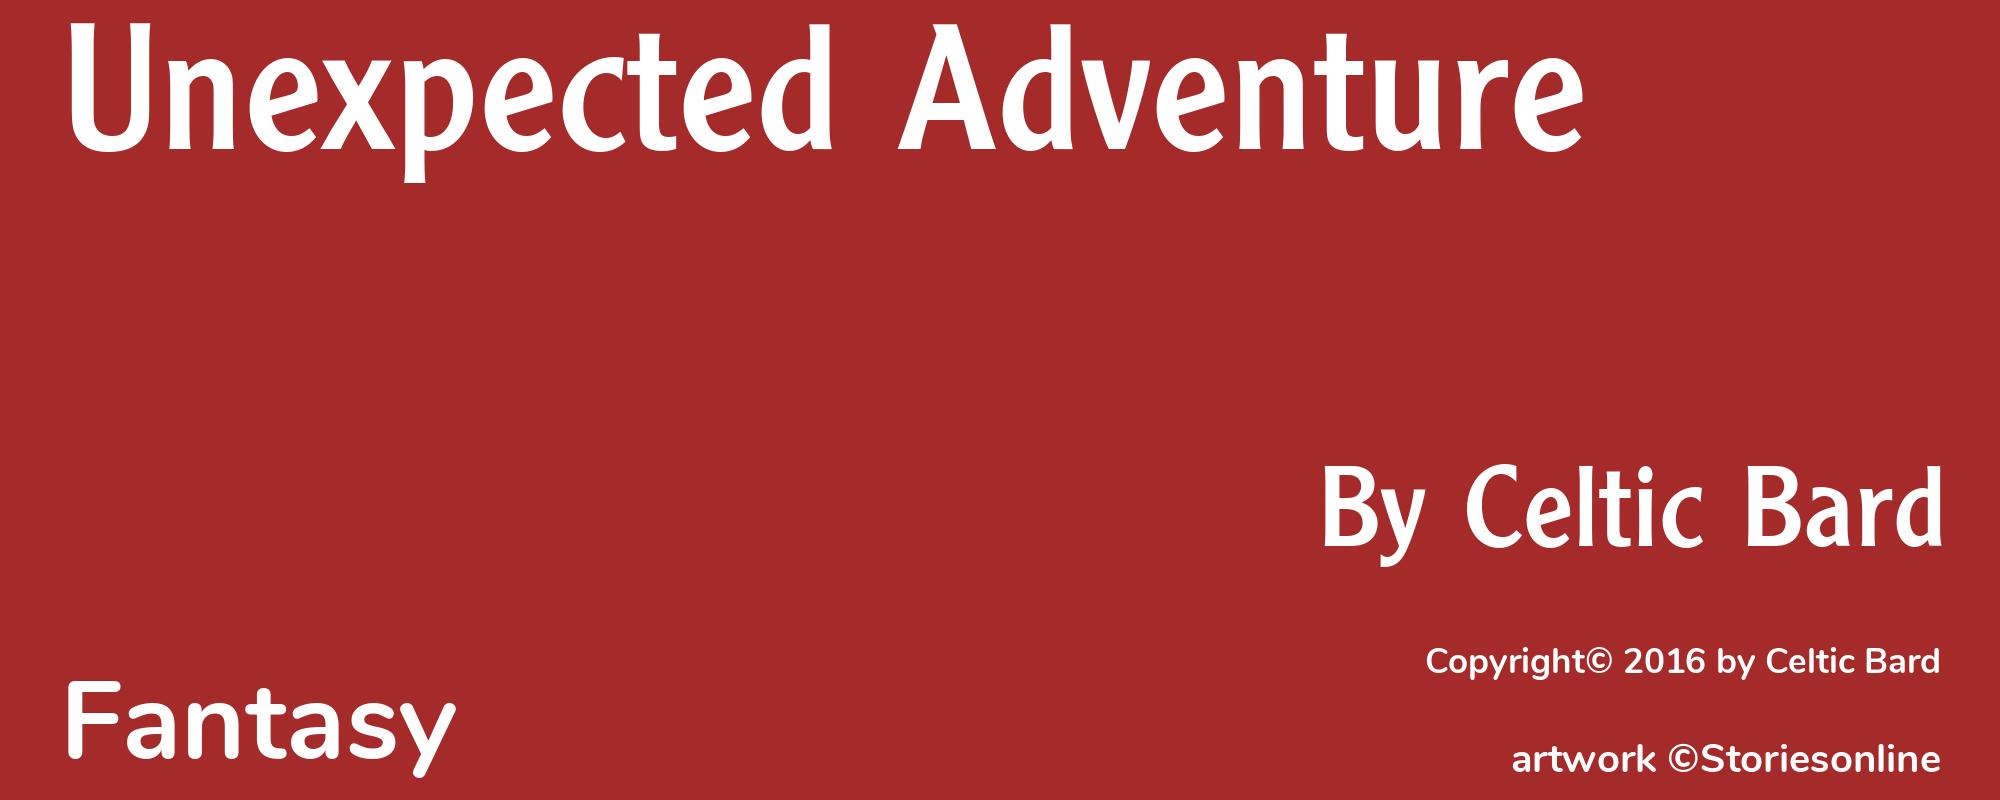 Unexpected Adventure - Cover